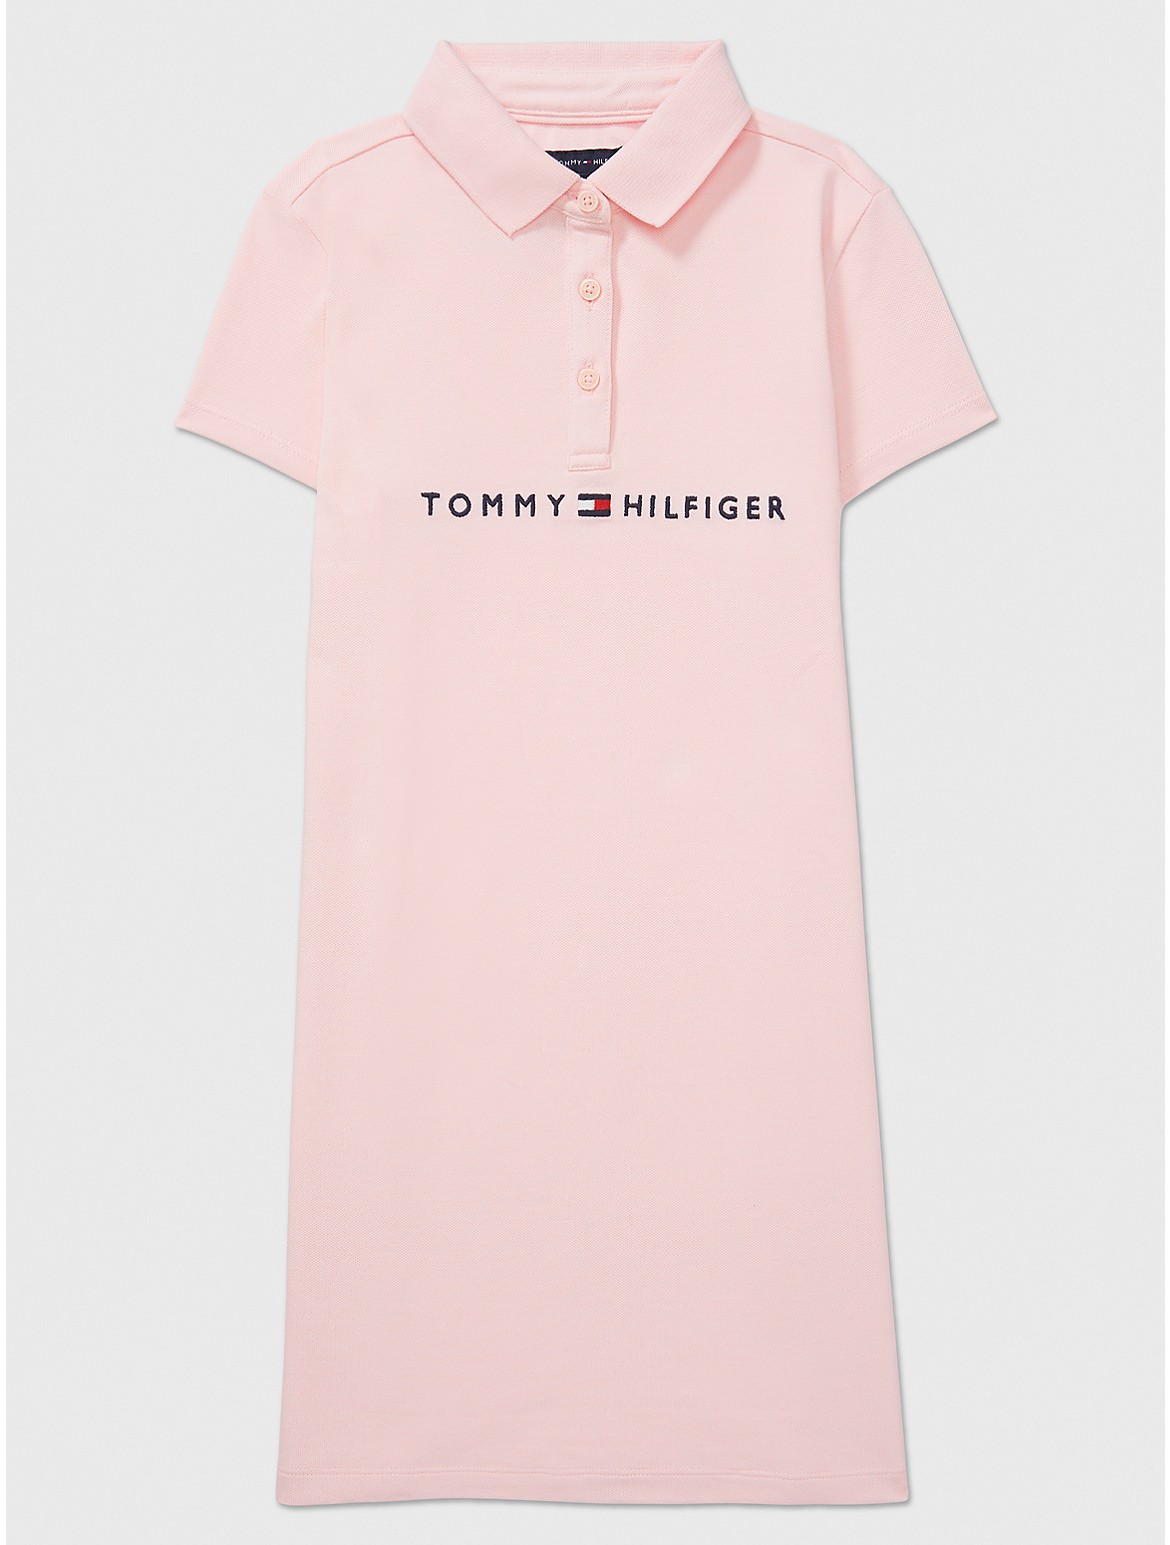 Tommy Hilfiger Girls' Kids' Hilfiger Logo Polo Dress